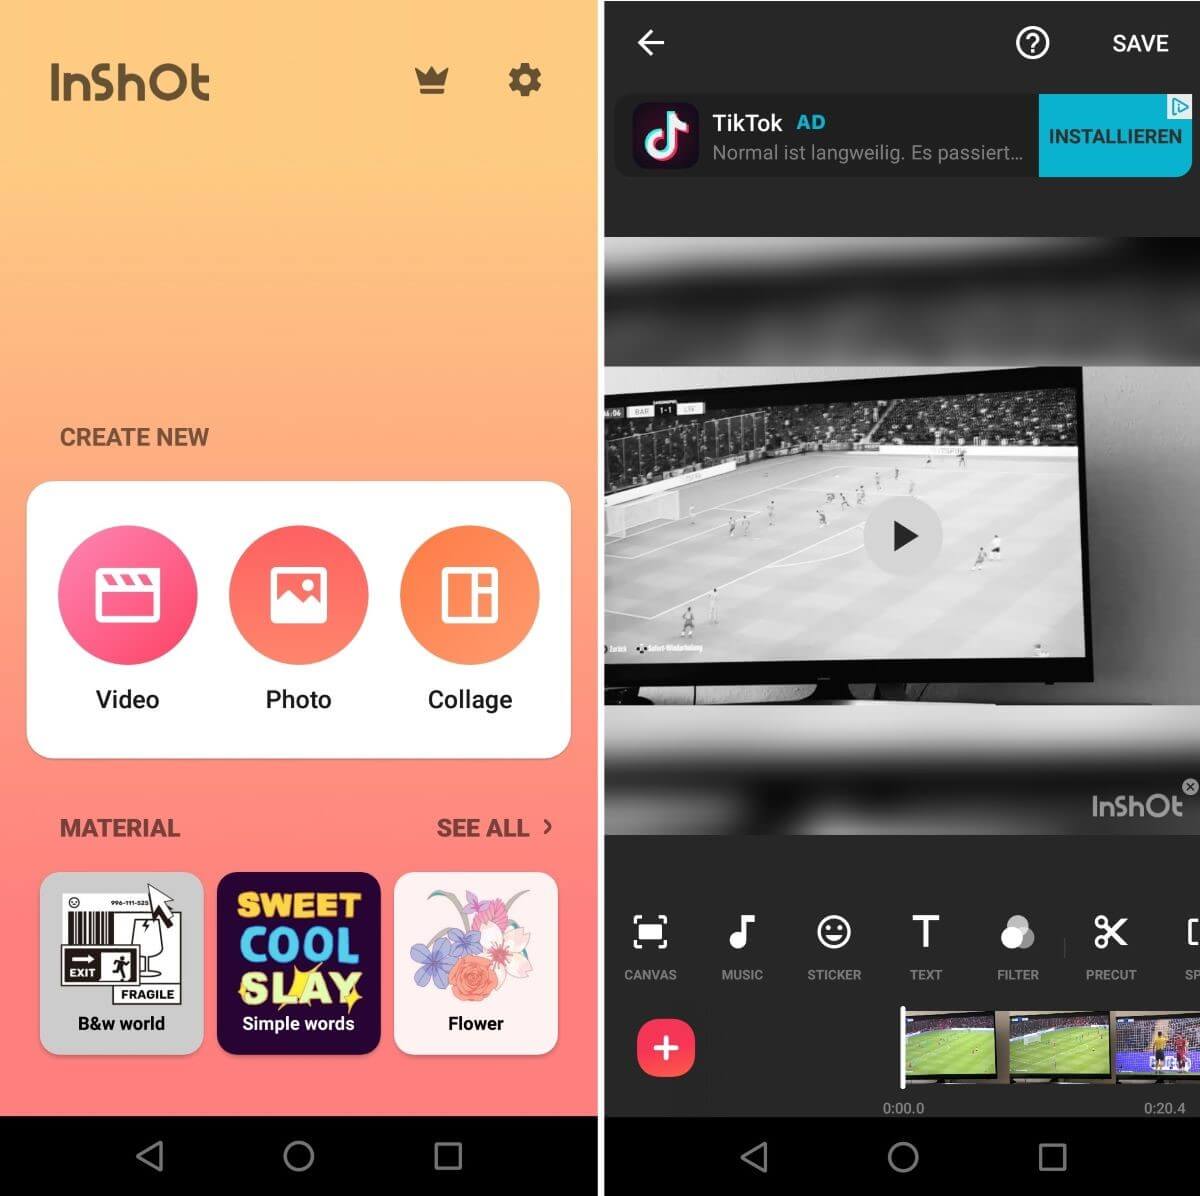 Screenshots of InShOt Android app